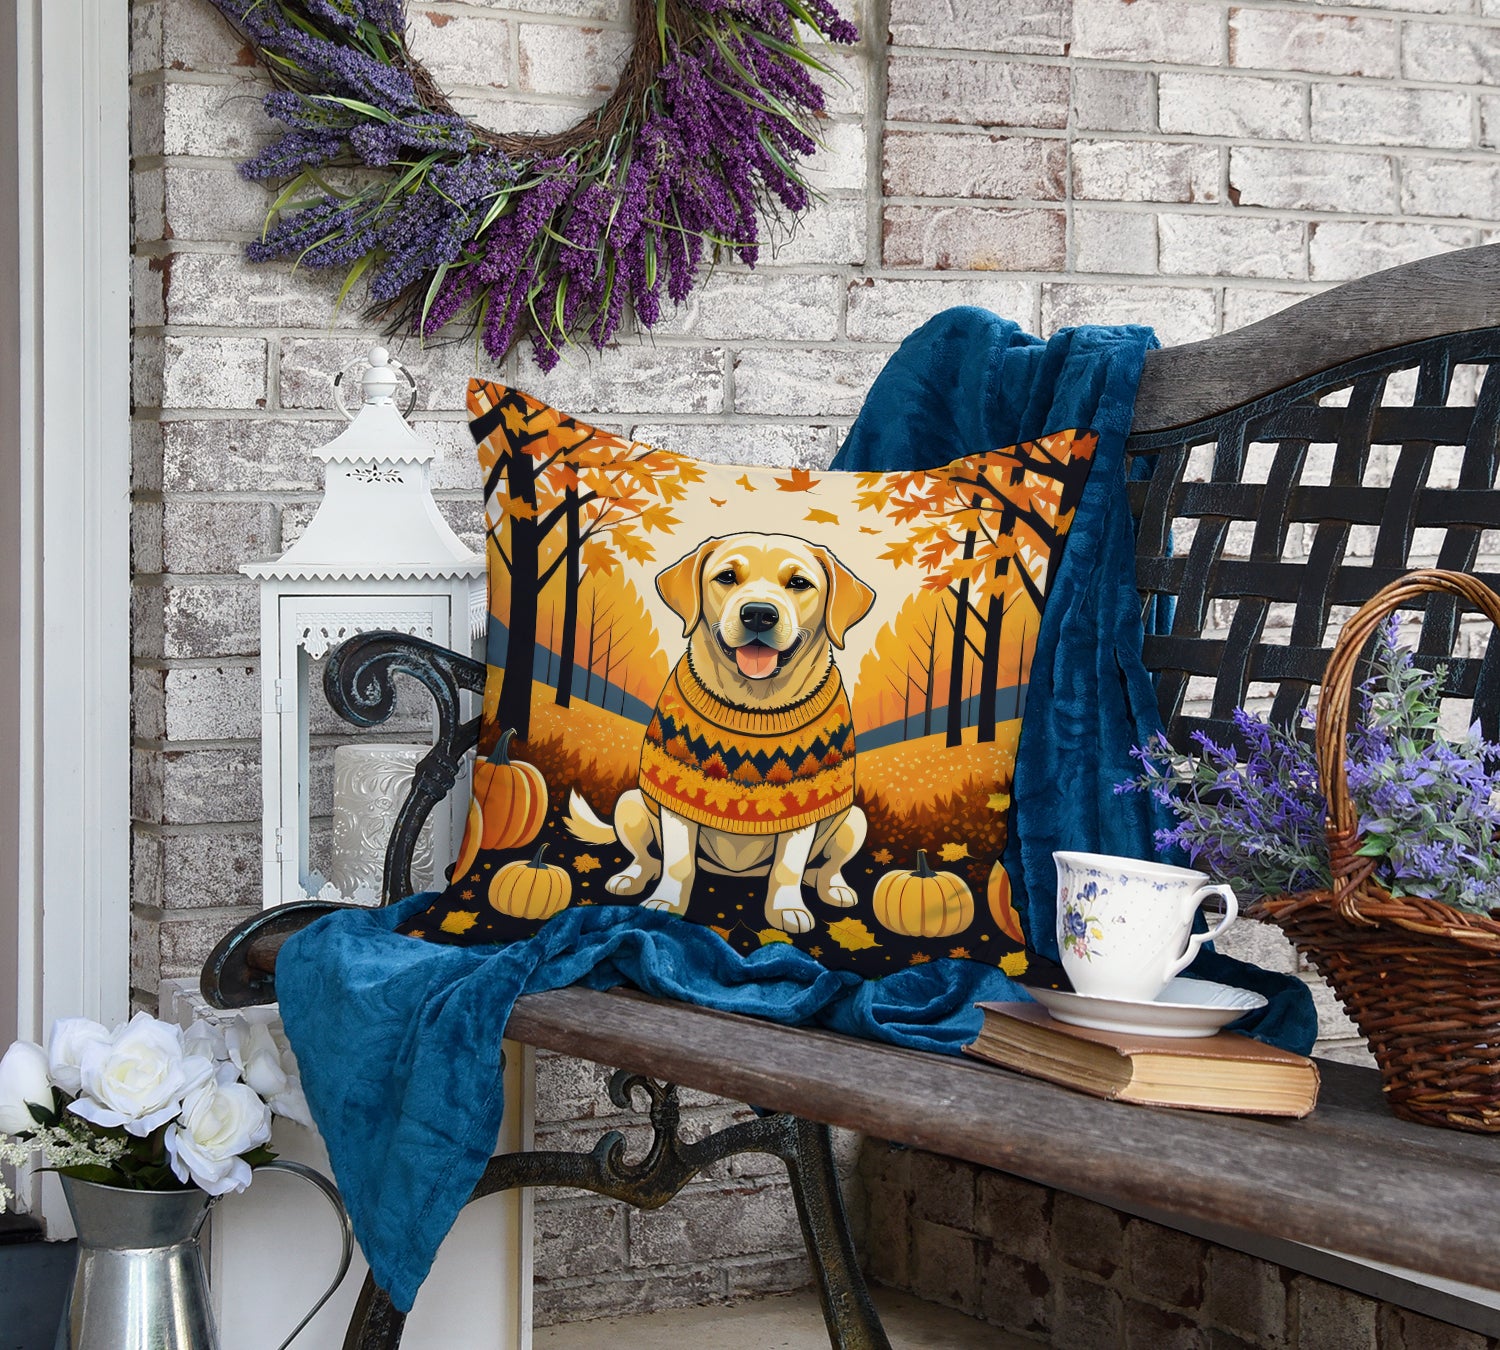 Buy this Yellow Labrador Retriever Fall Fabric Decorative Pillow